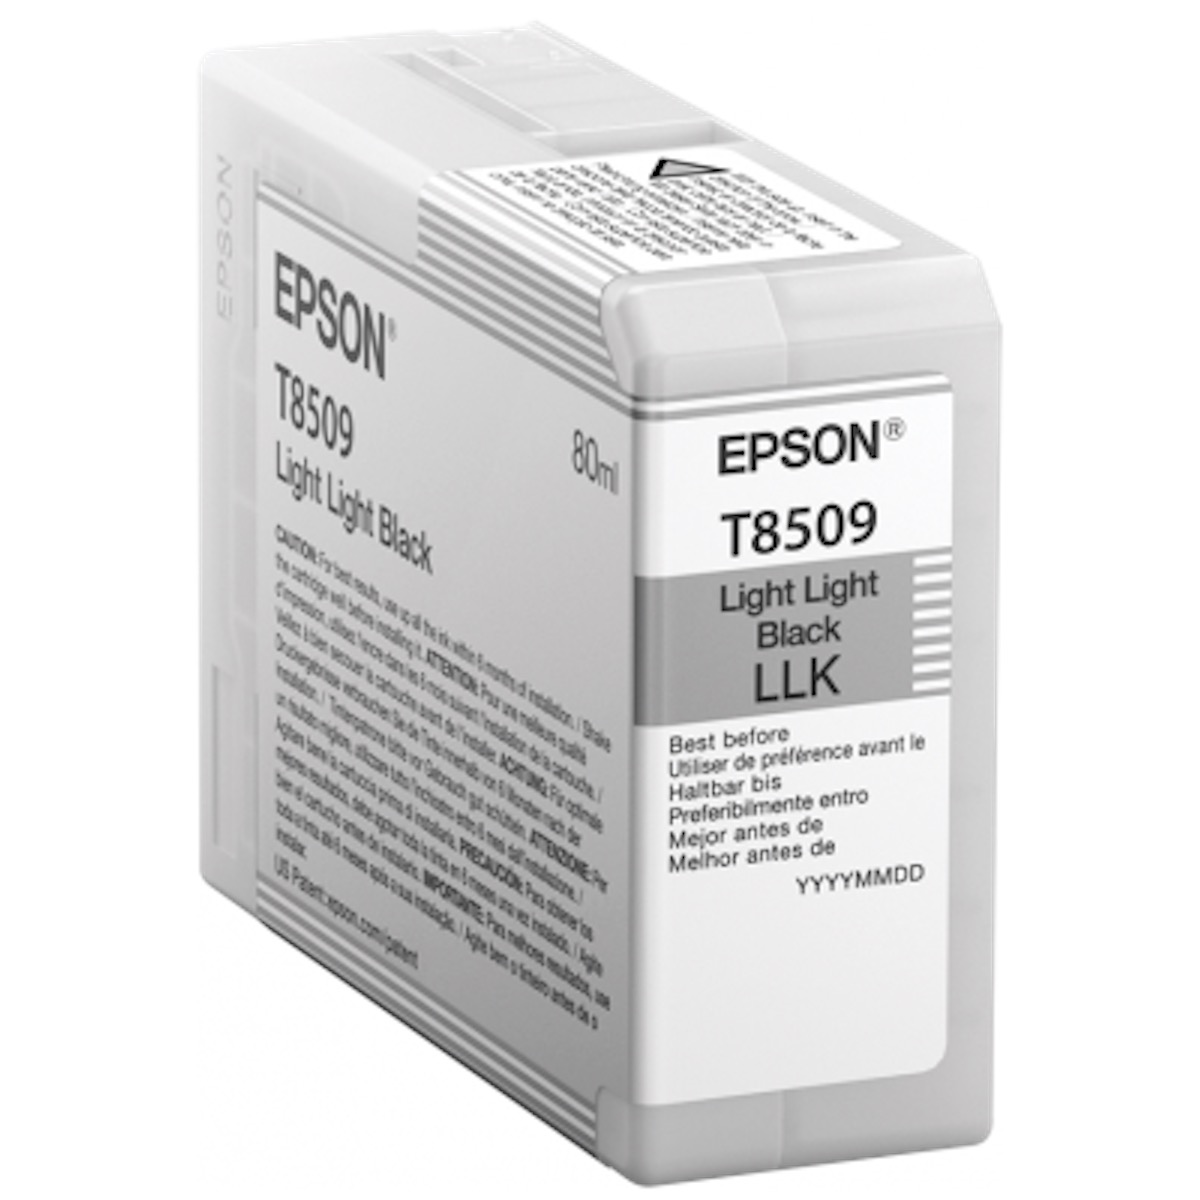 Epson T8509 light light black Tinte